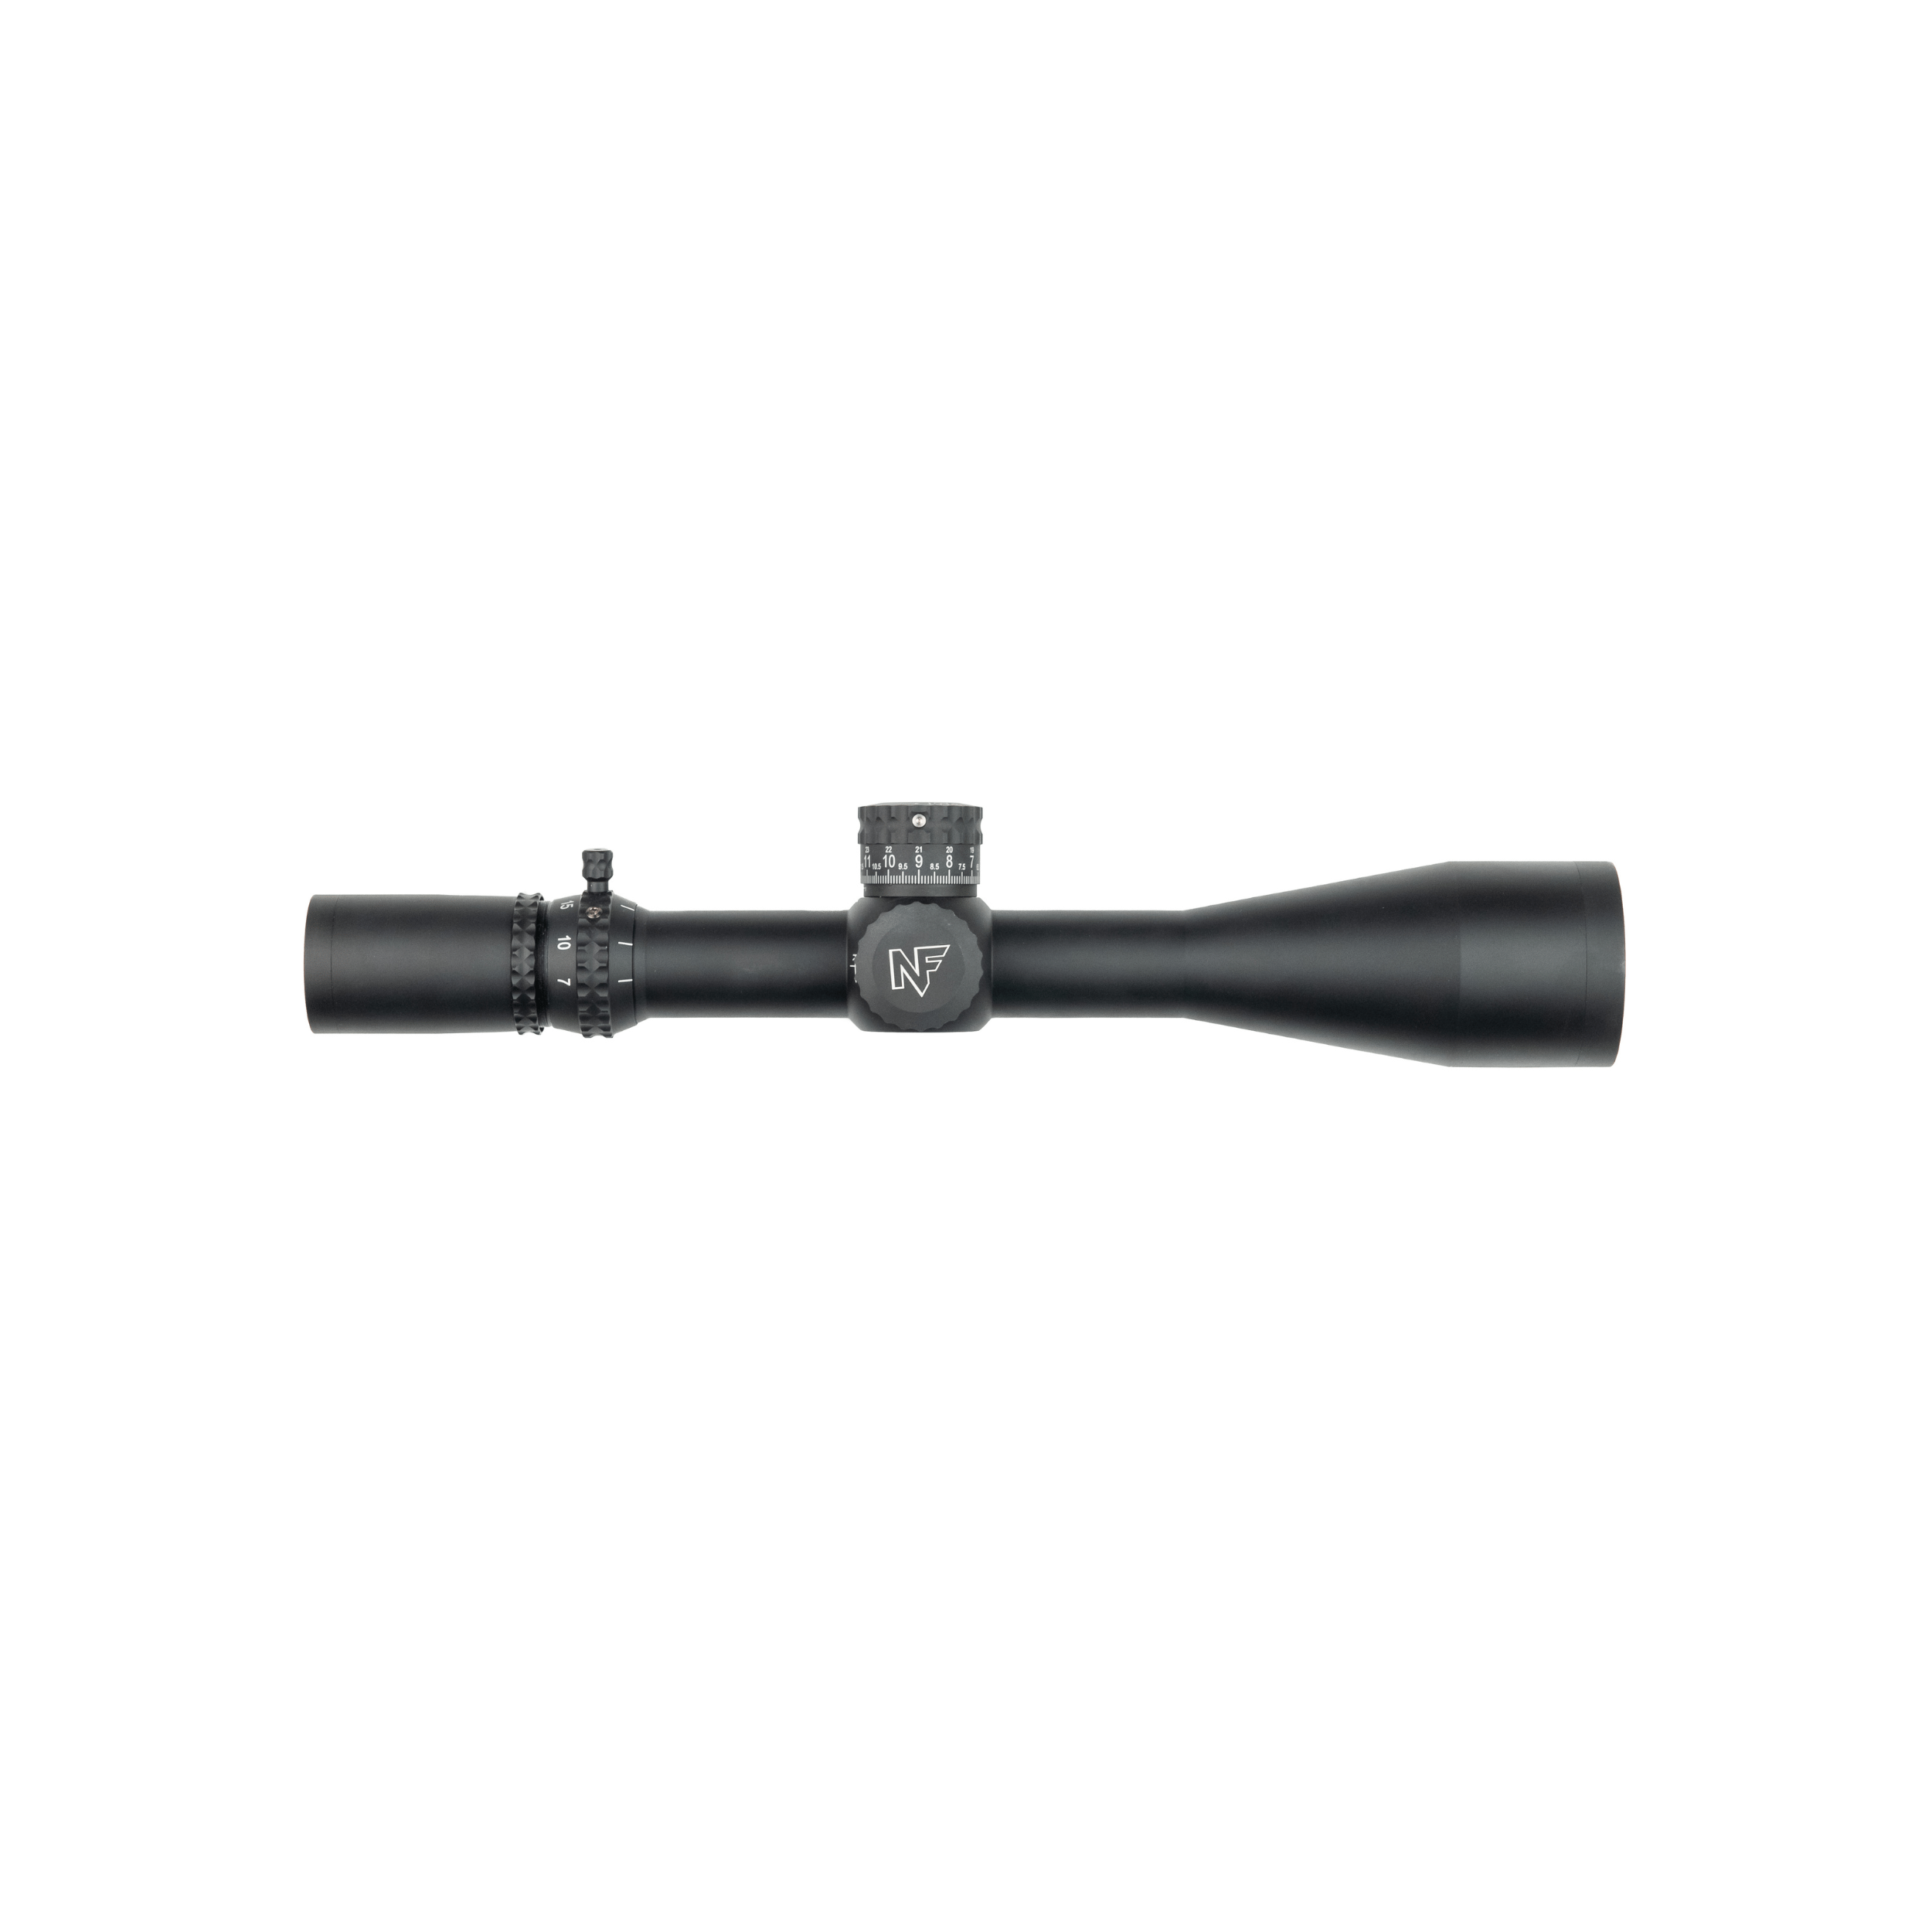 ATACR – 7-35x56mm F2